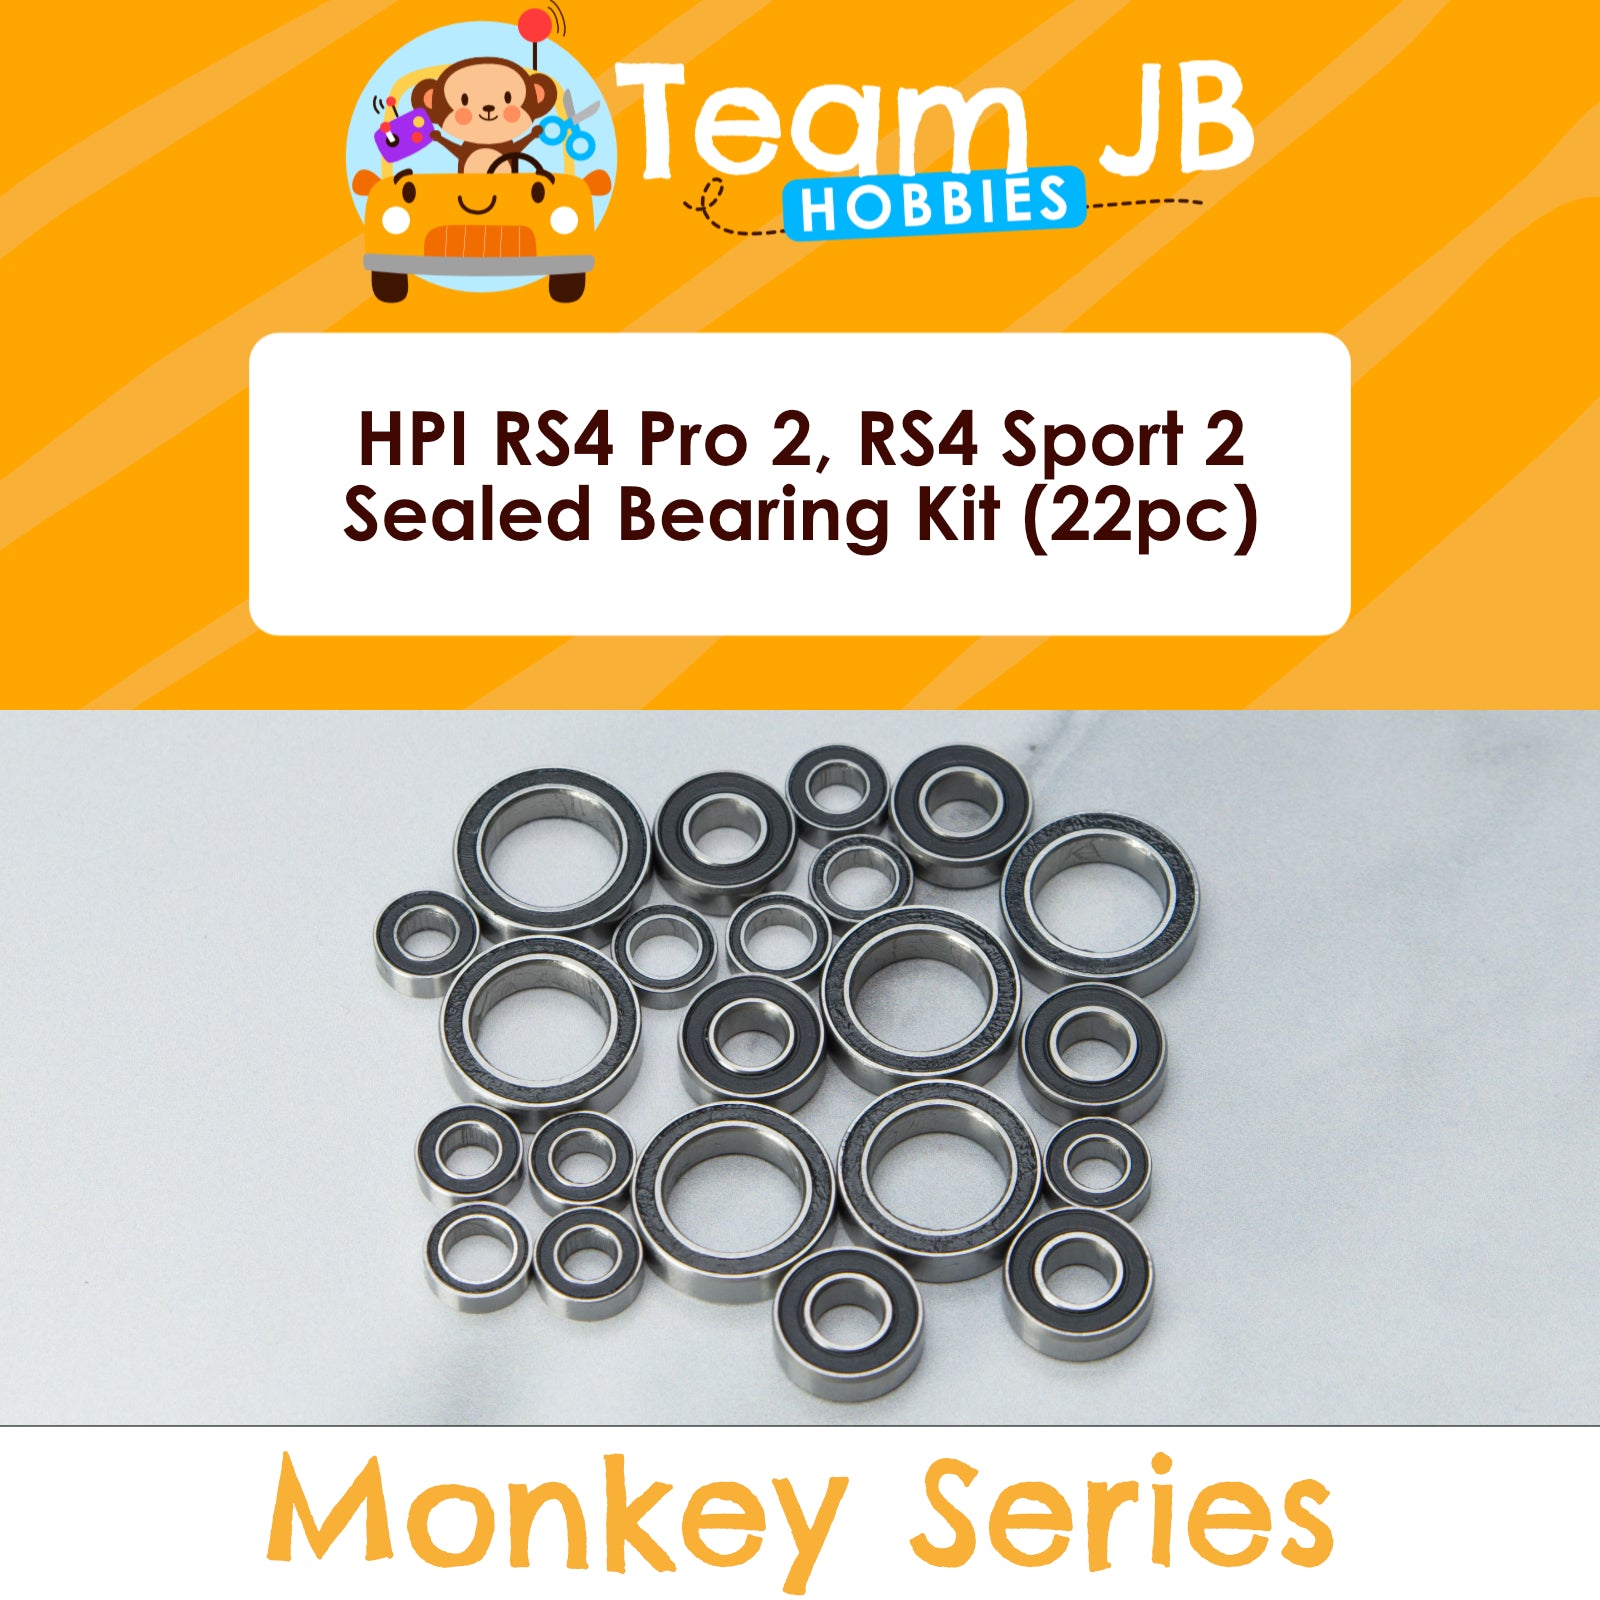 HPI RS4 Pro 2, RS4 Sport 2 - Sealed Bearing Kit